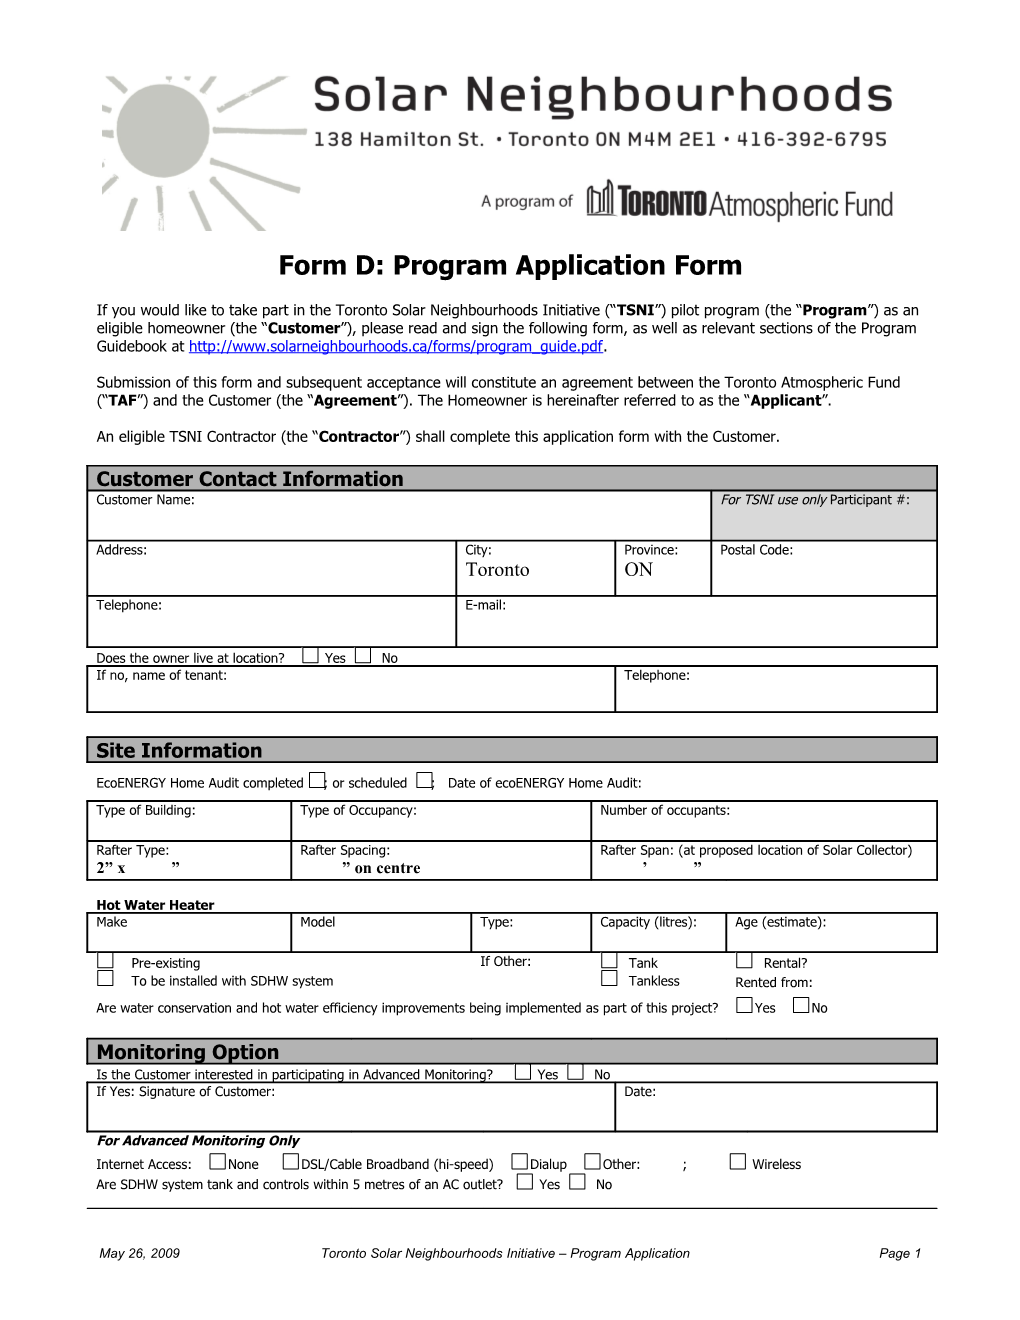 Form D: Program Application Form